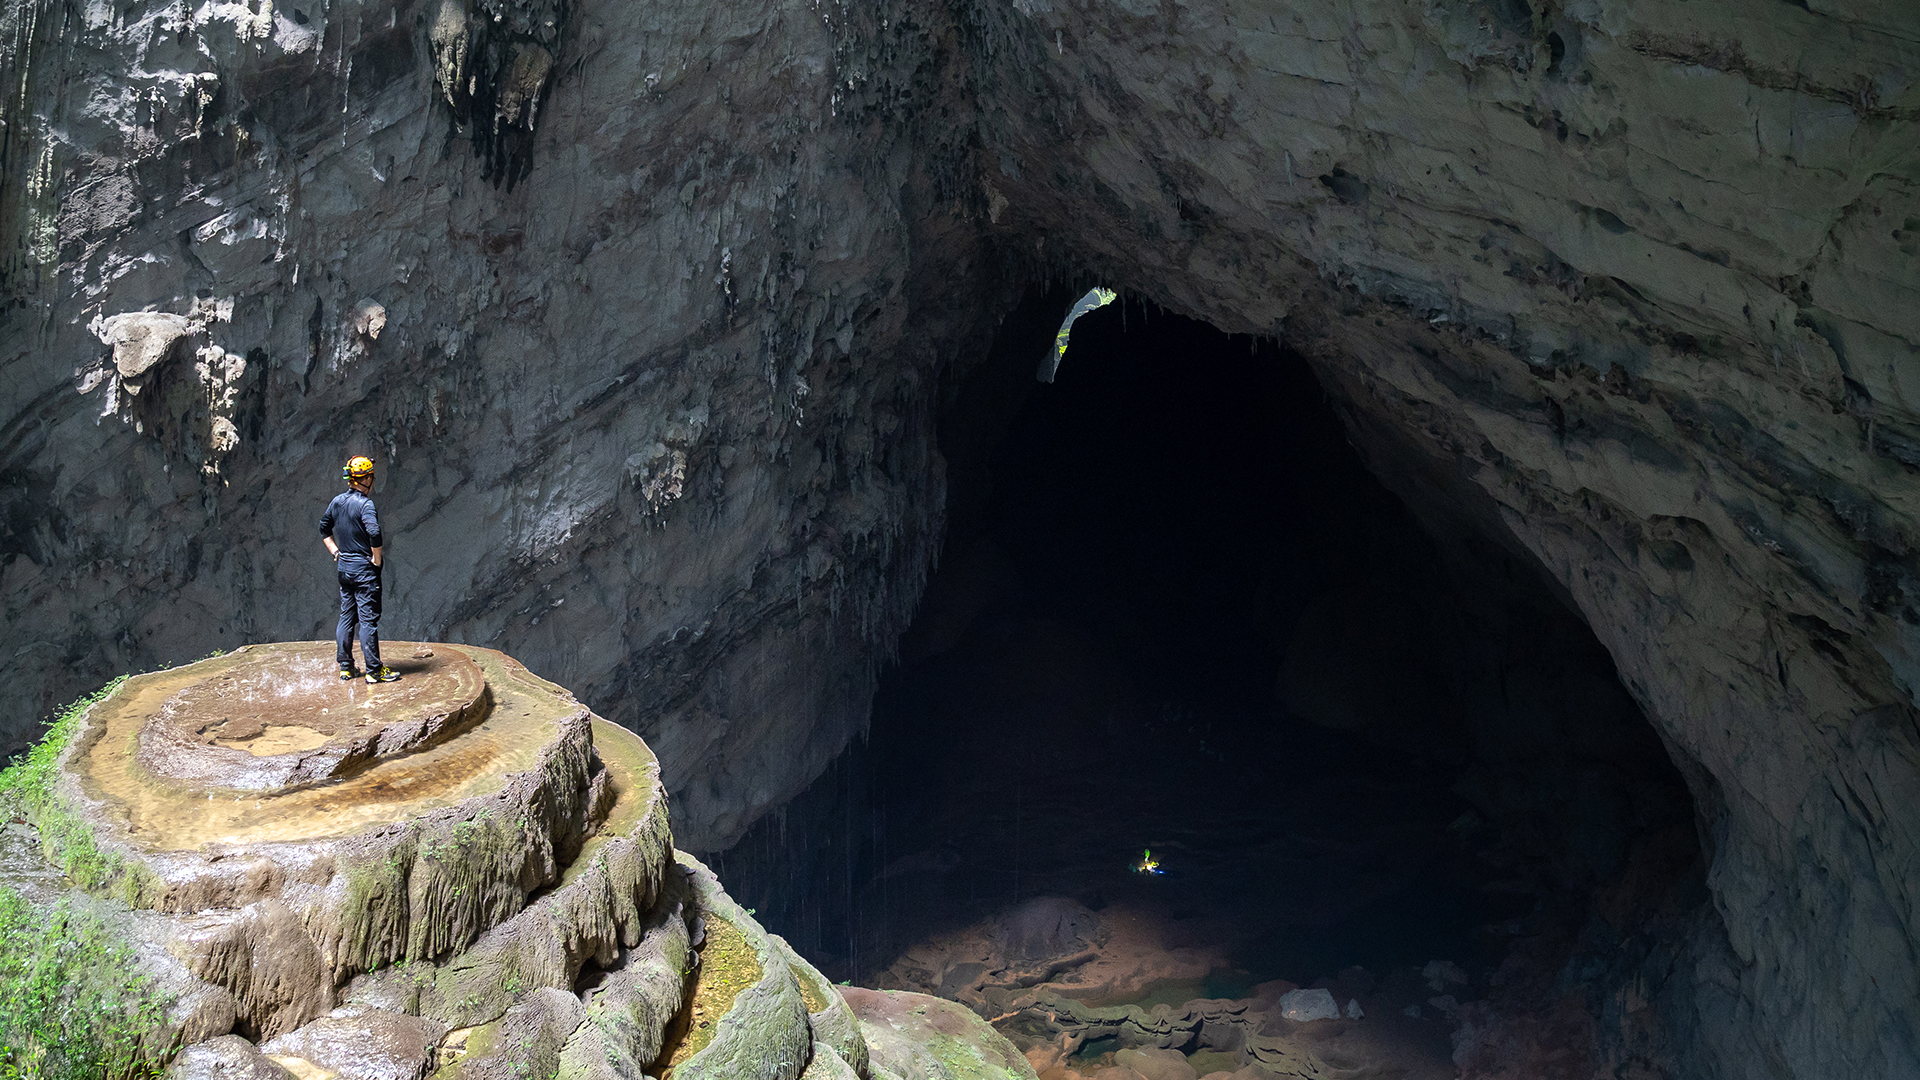 A deep, dark cave